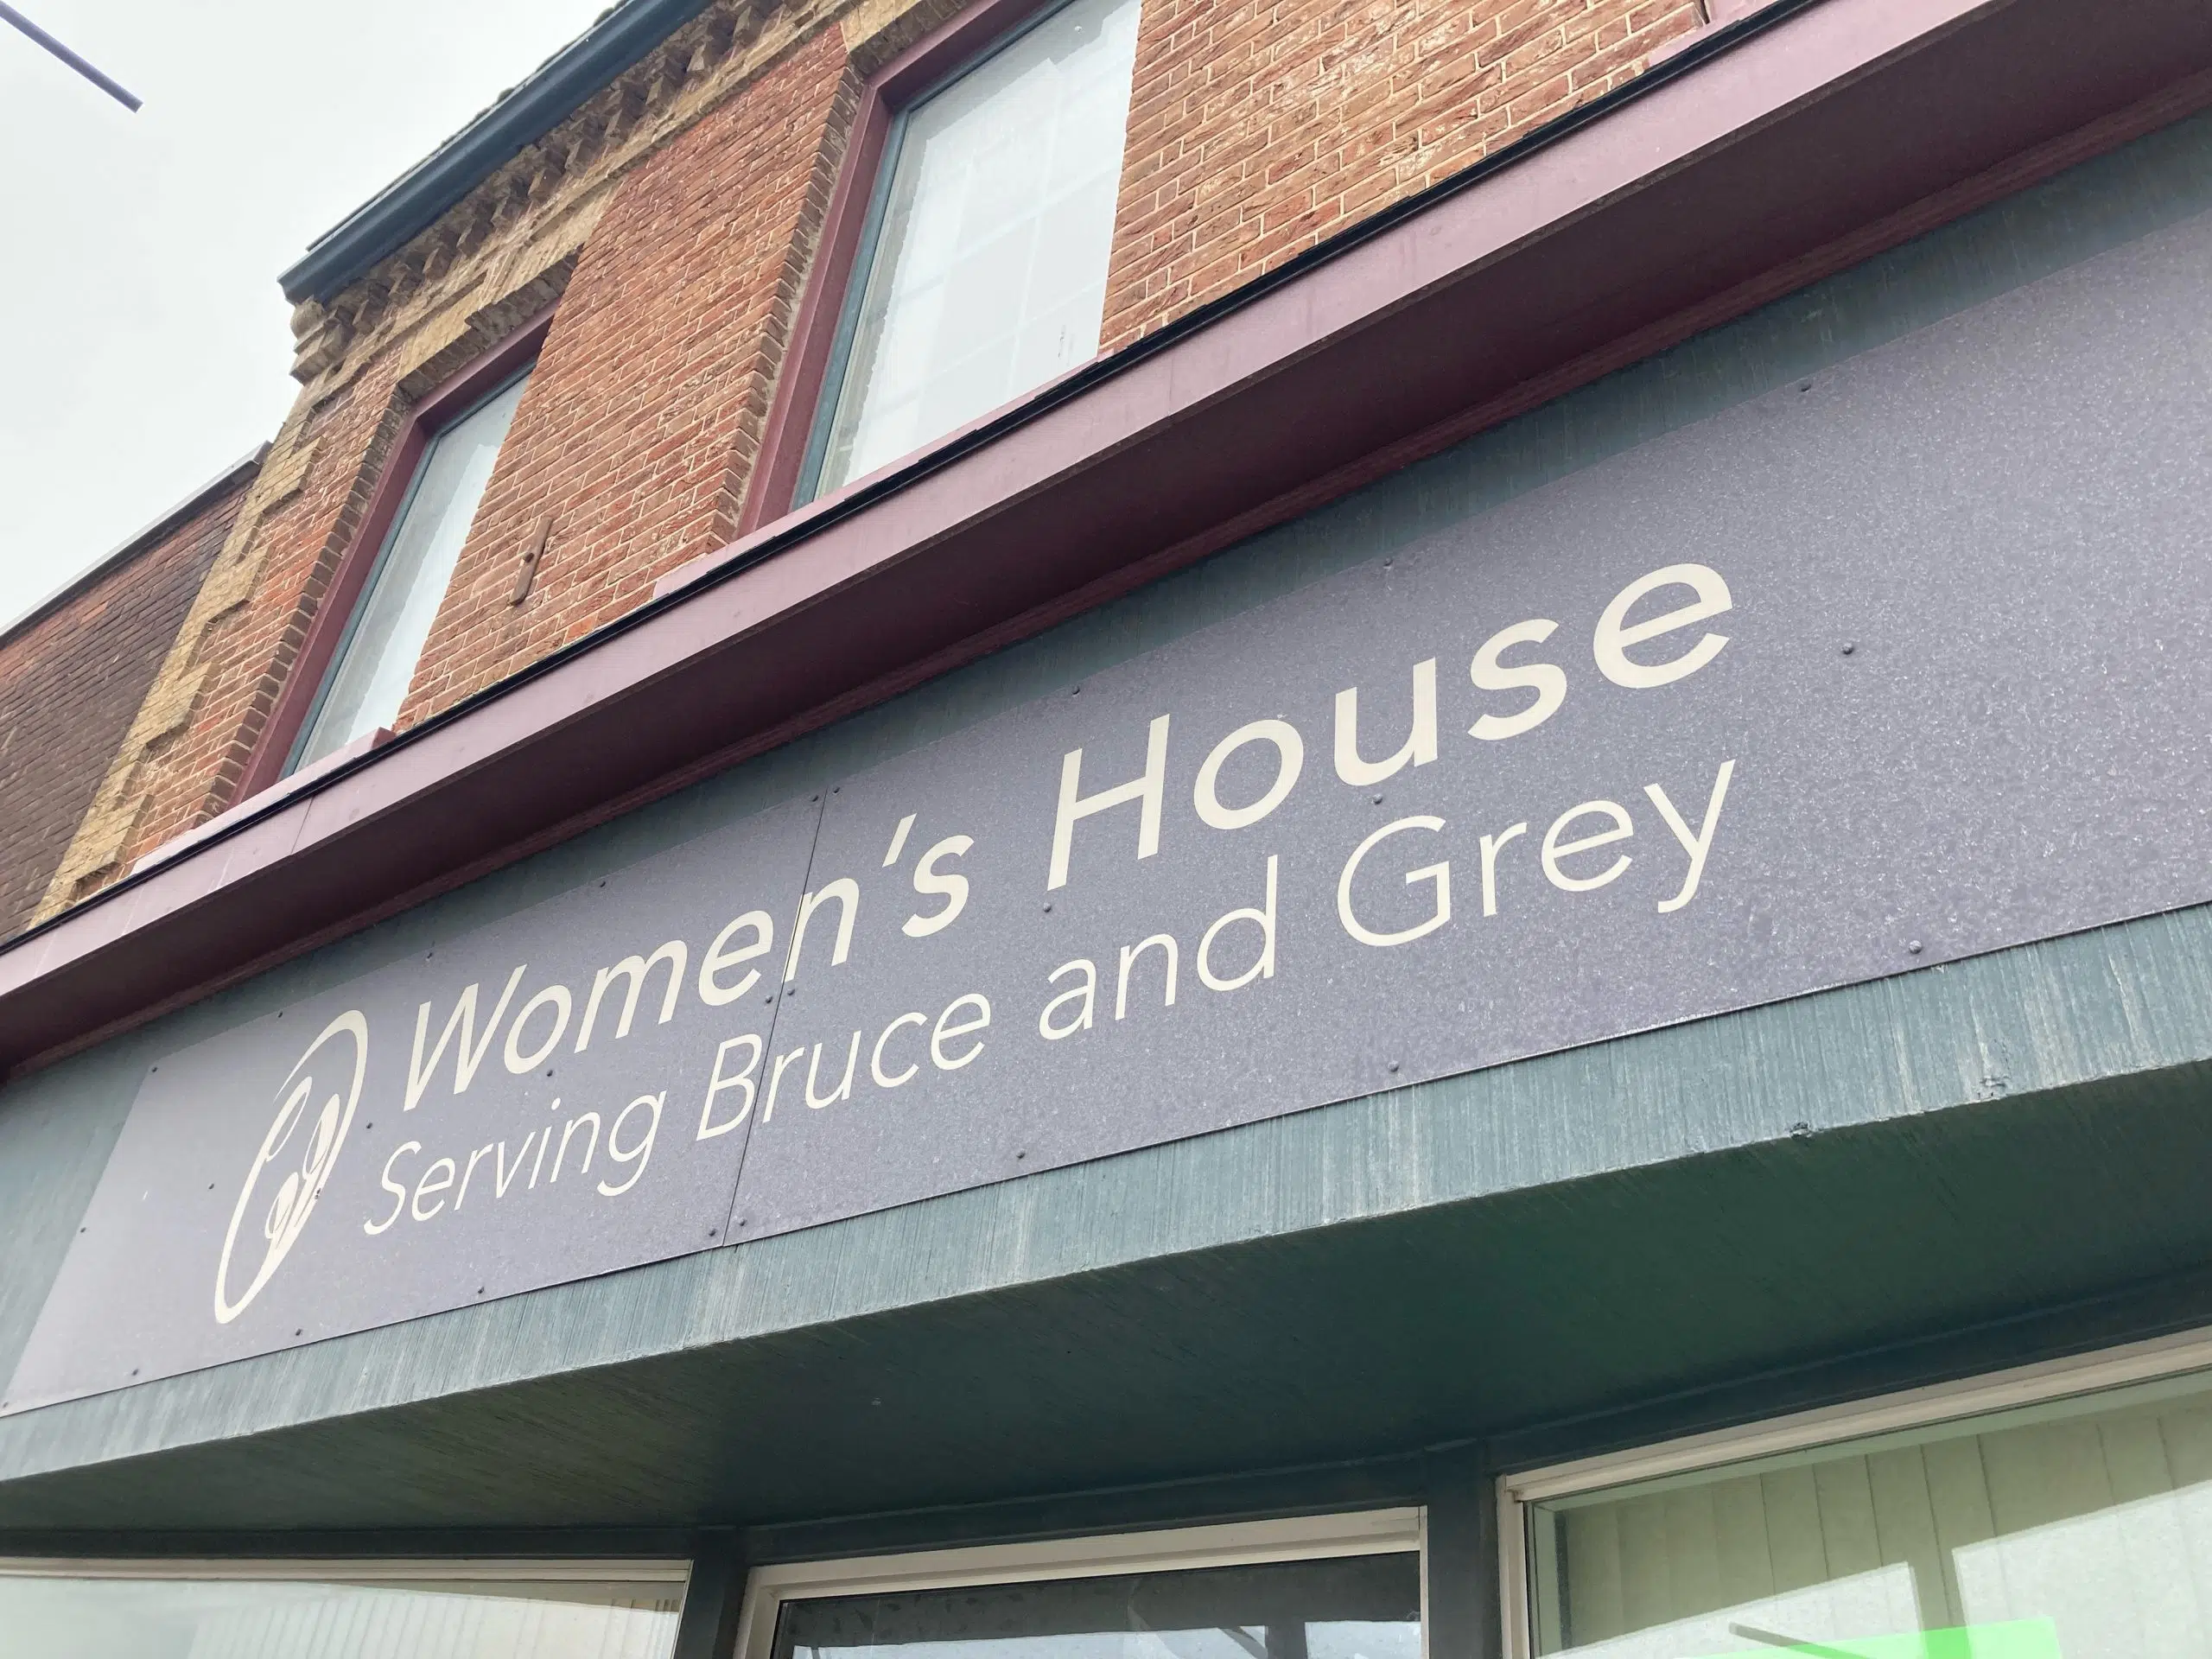 Over $1,400 Raised For Women’s House Grey Bruce Through International Women’s Day Event